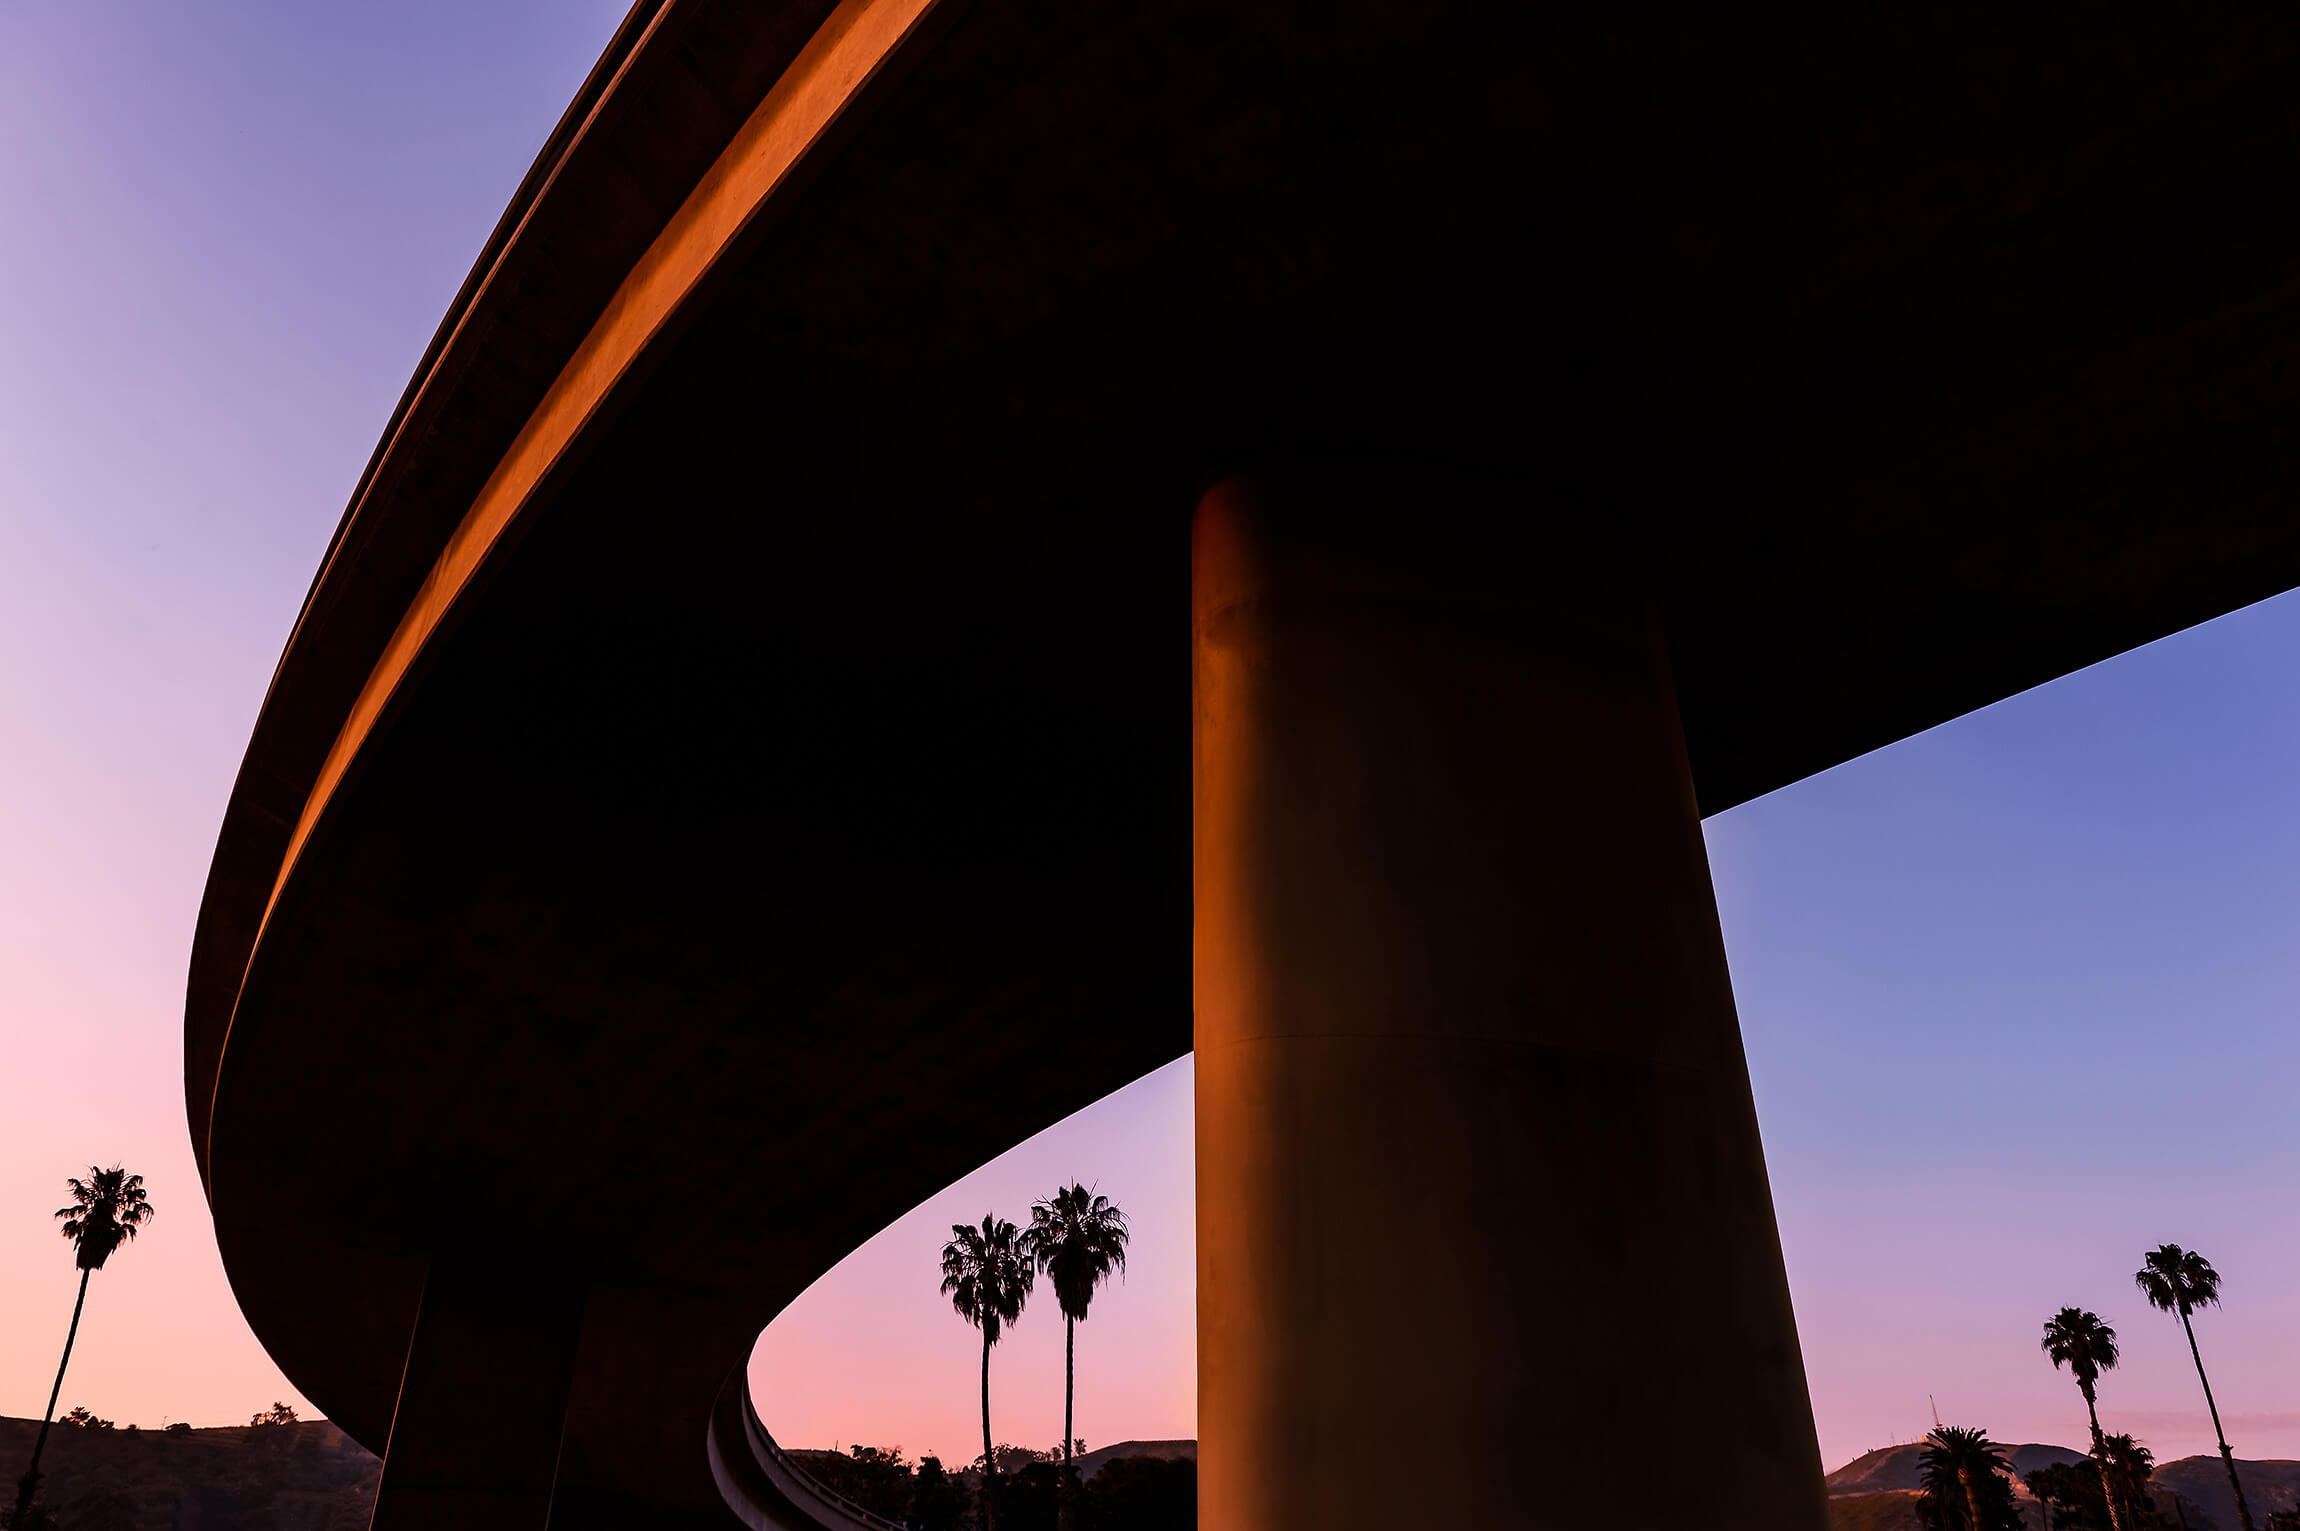 Ventura California Landscape Image of 101 Freeway.